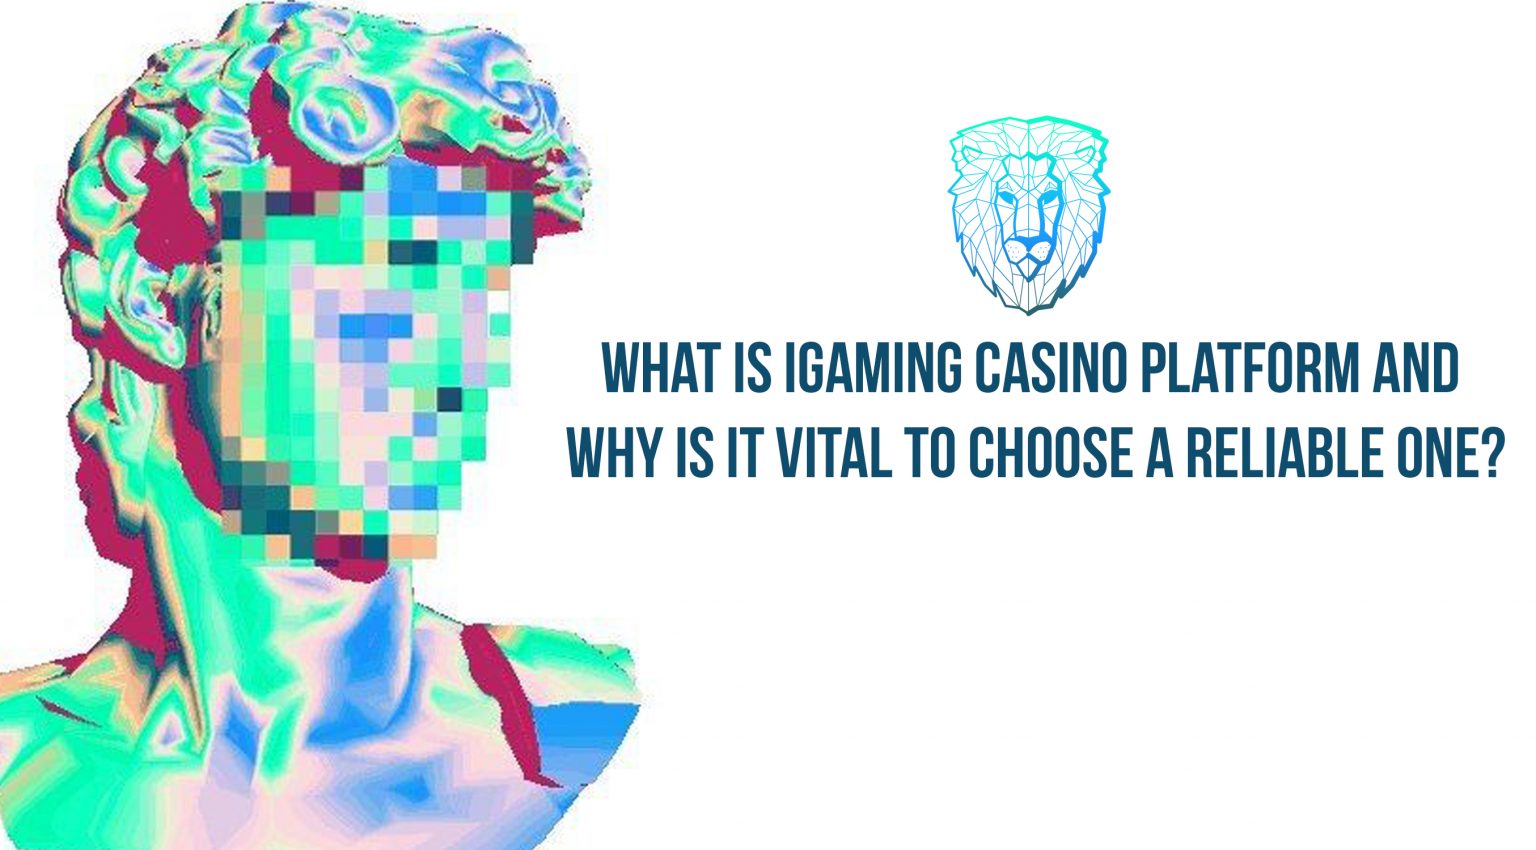 igaming casino platform